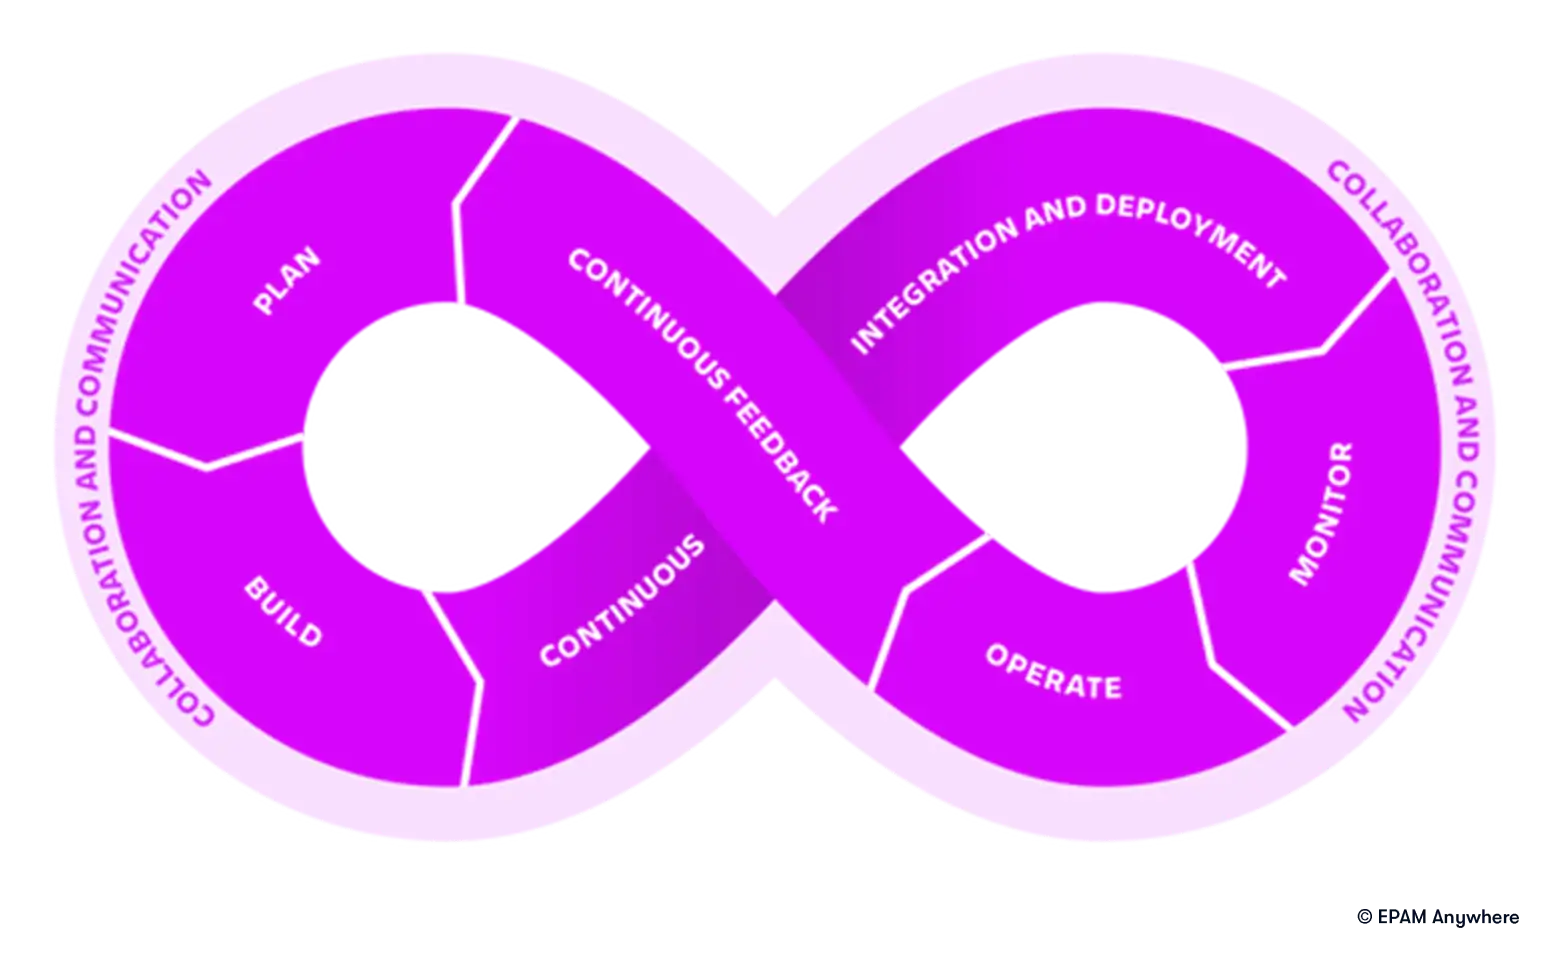 A loop illustrating key DevOps stages and actions illustration